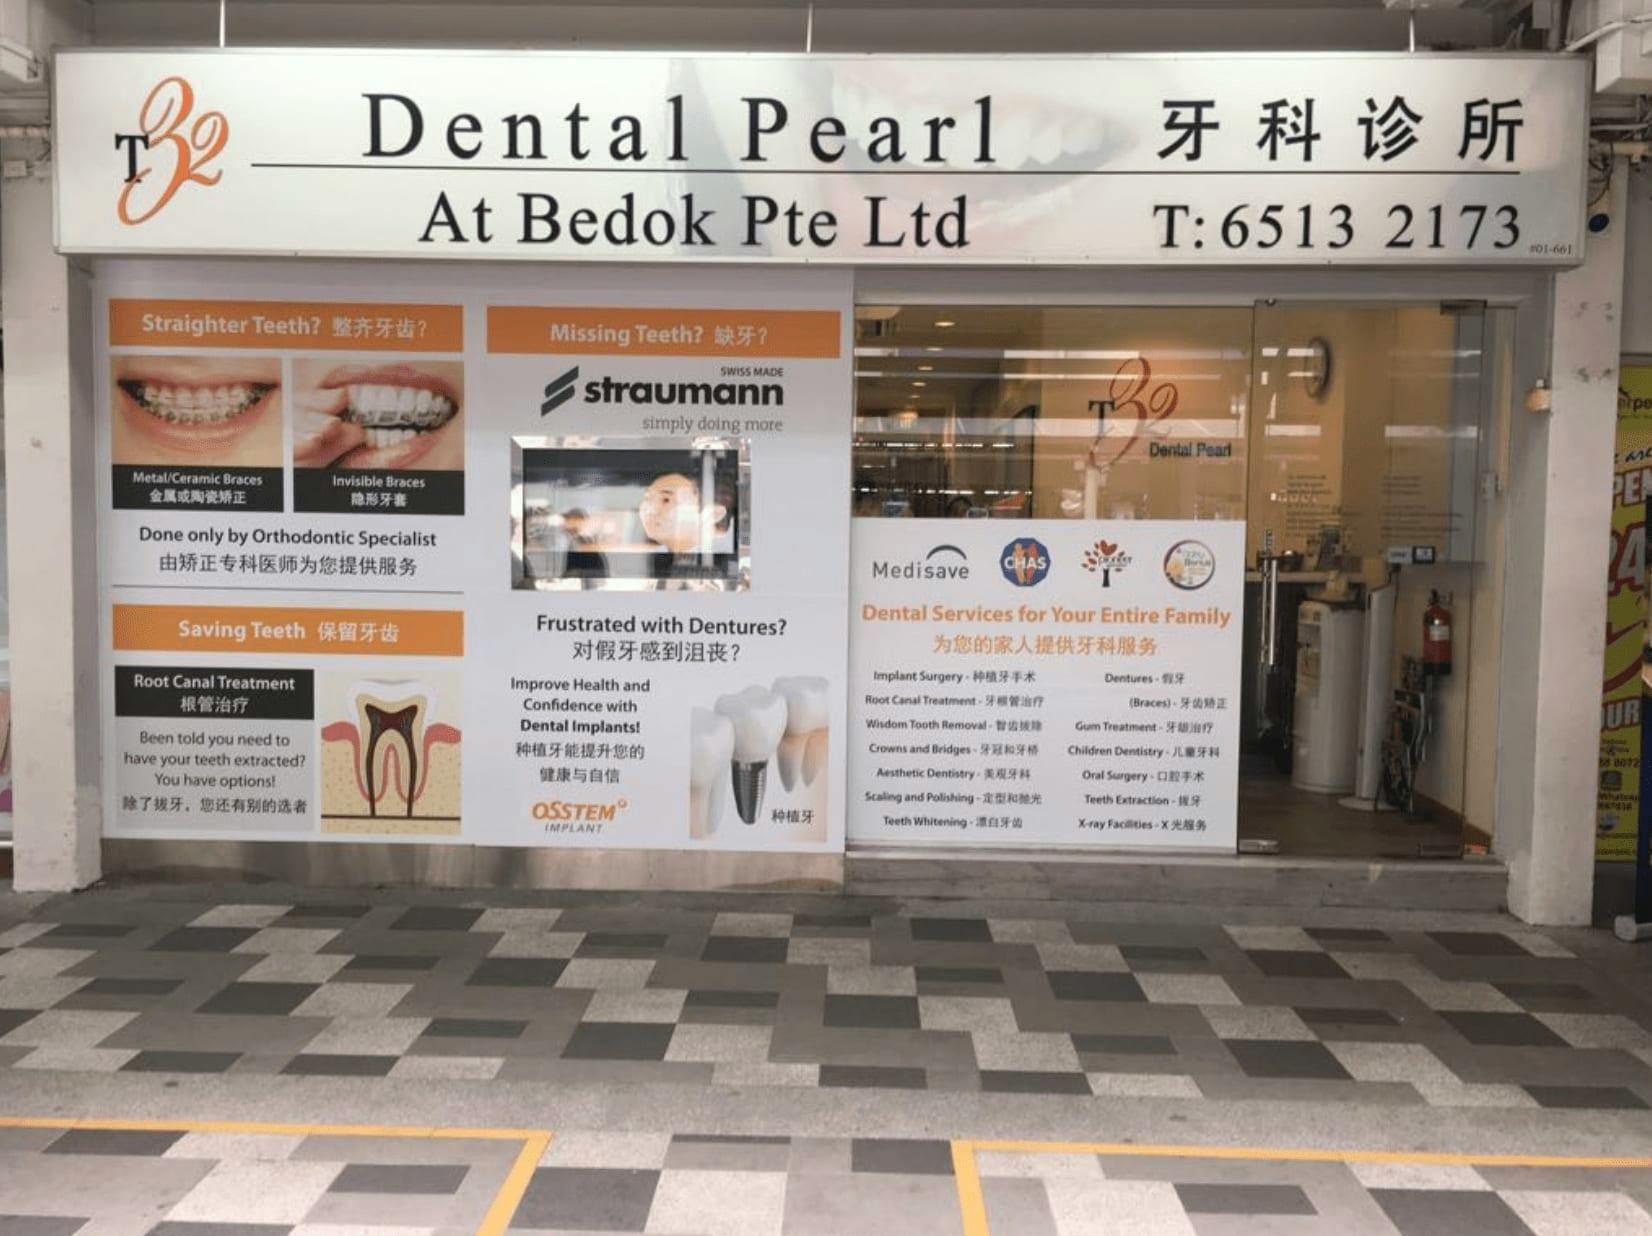 T32 Dental Pearl @ Bedok